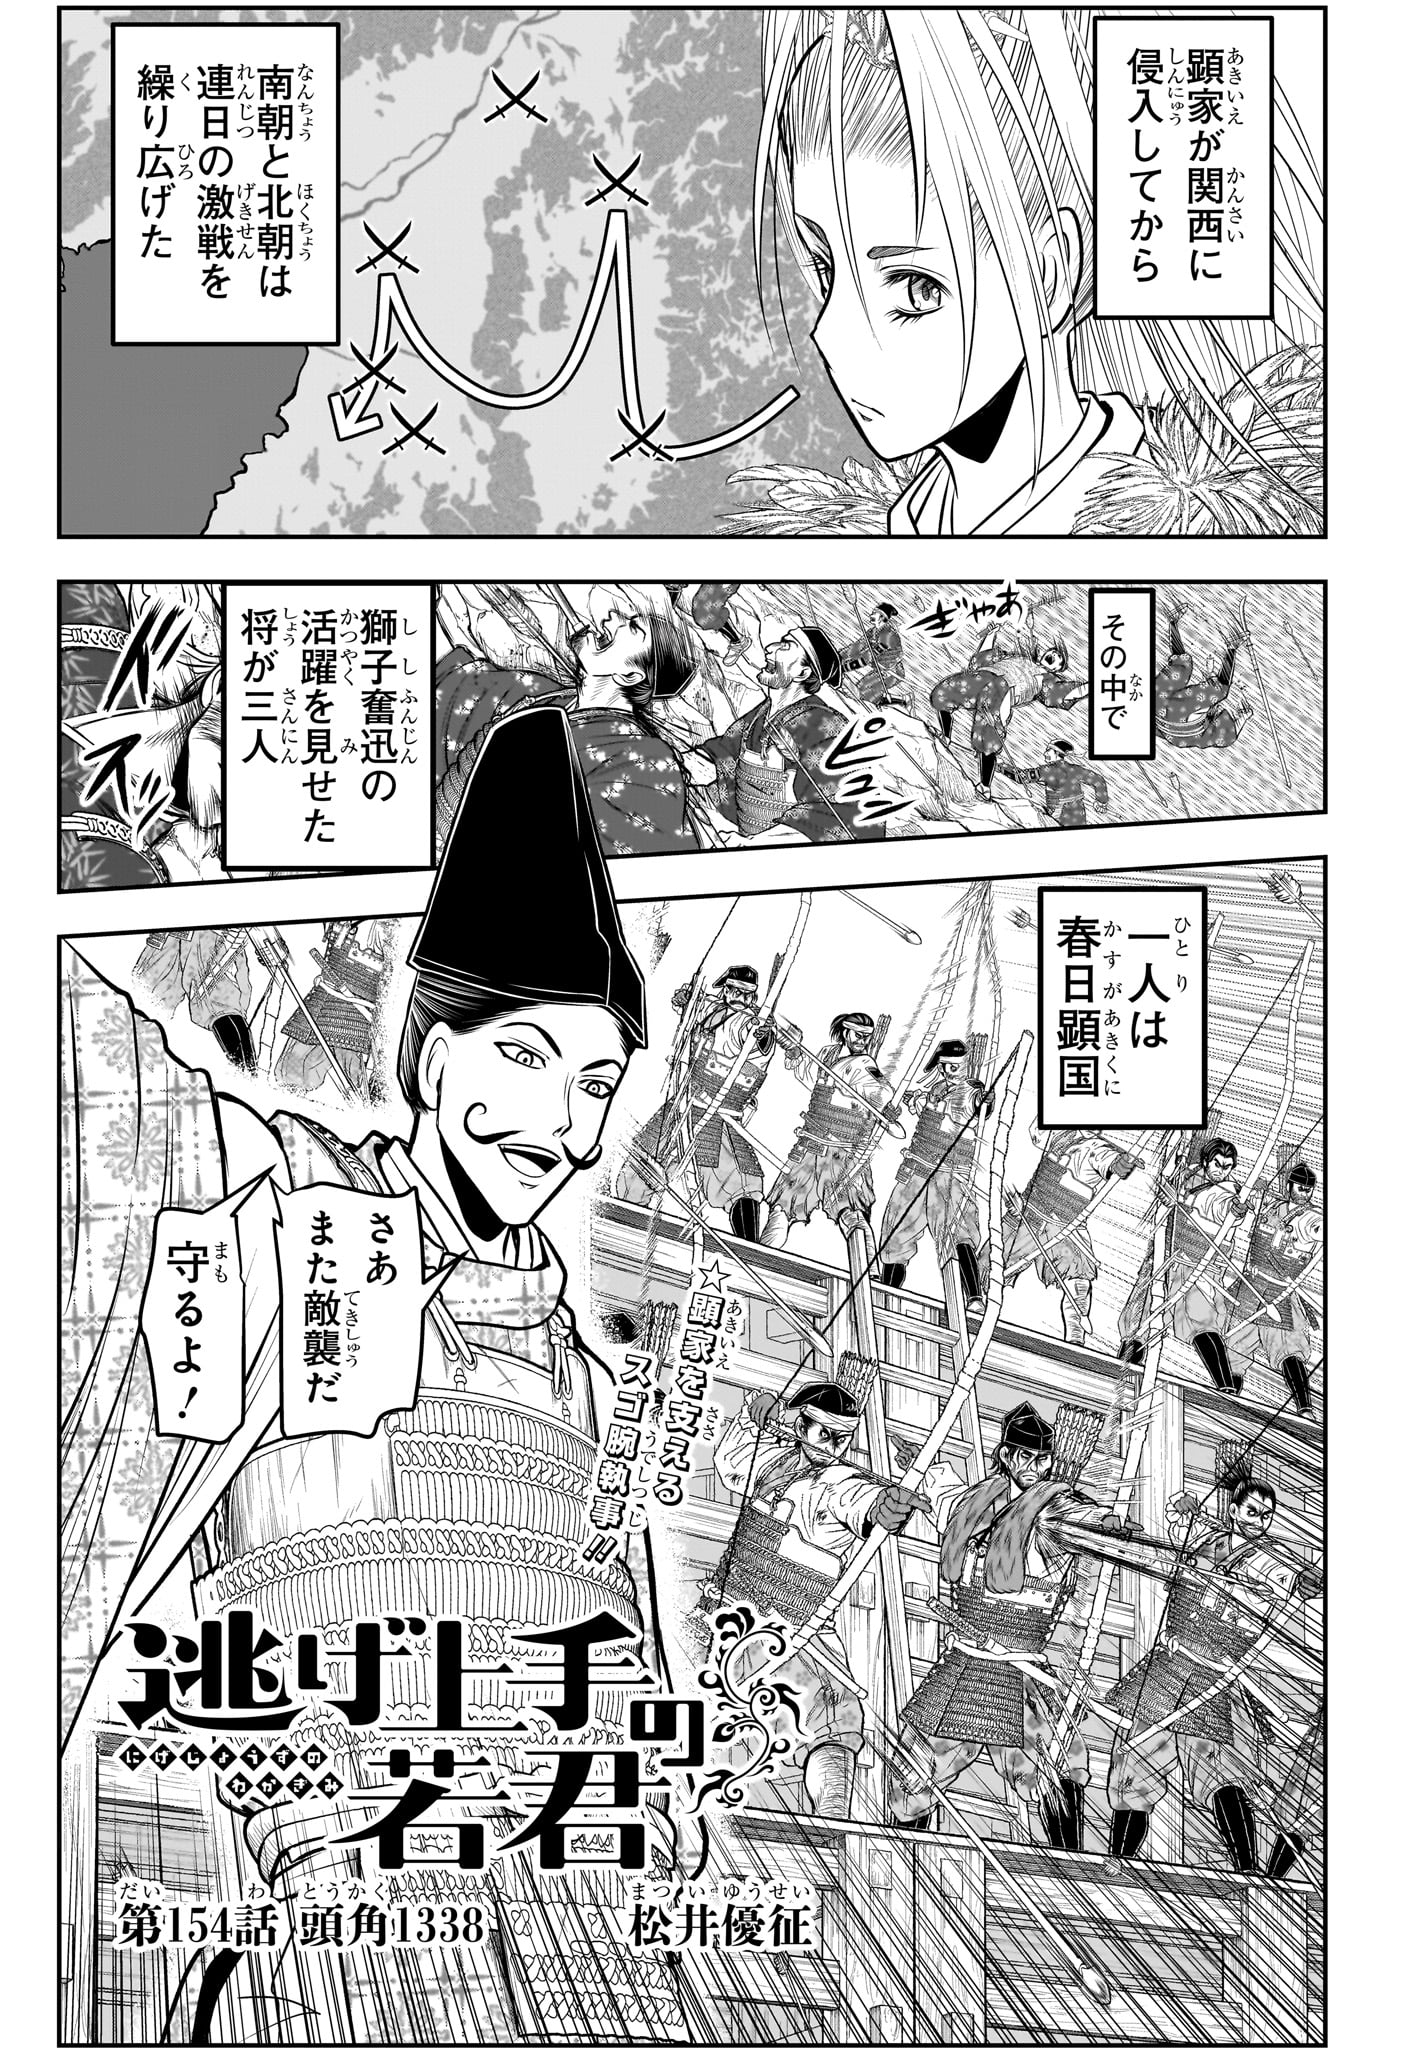 Nige Jouzu no Wakagimi - Chapter 154 - Page 1